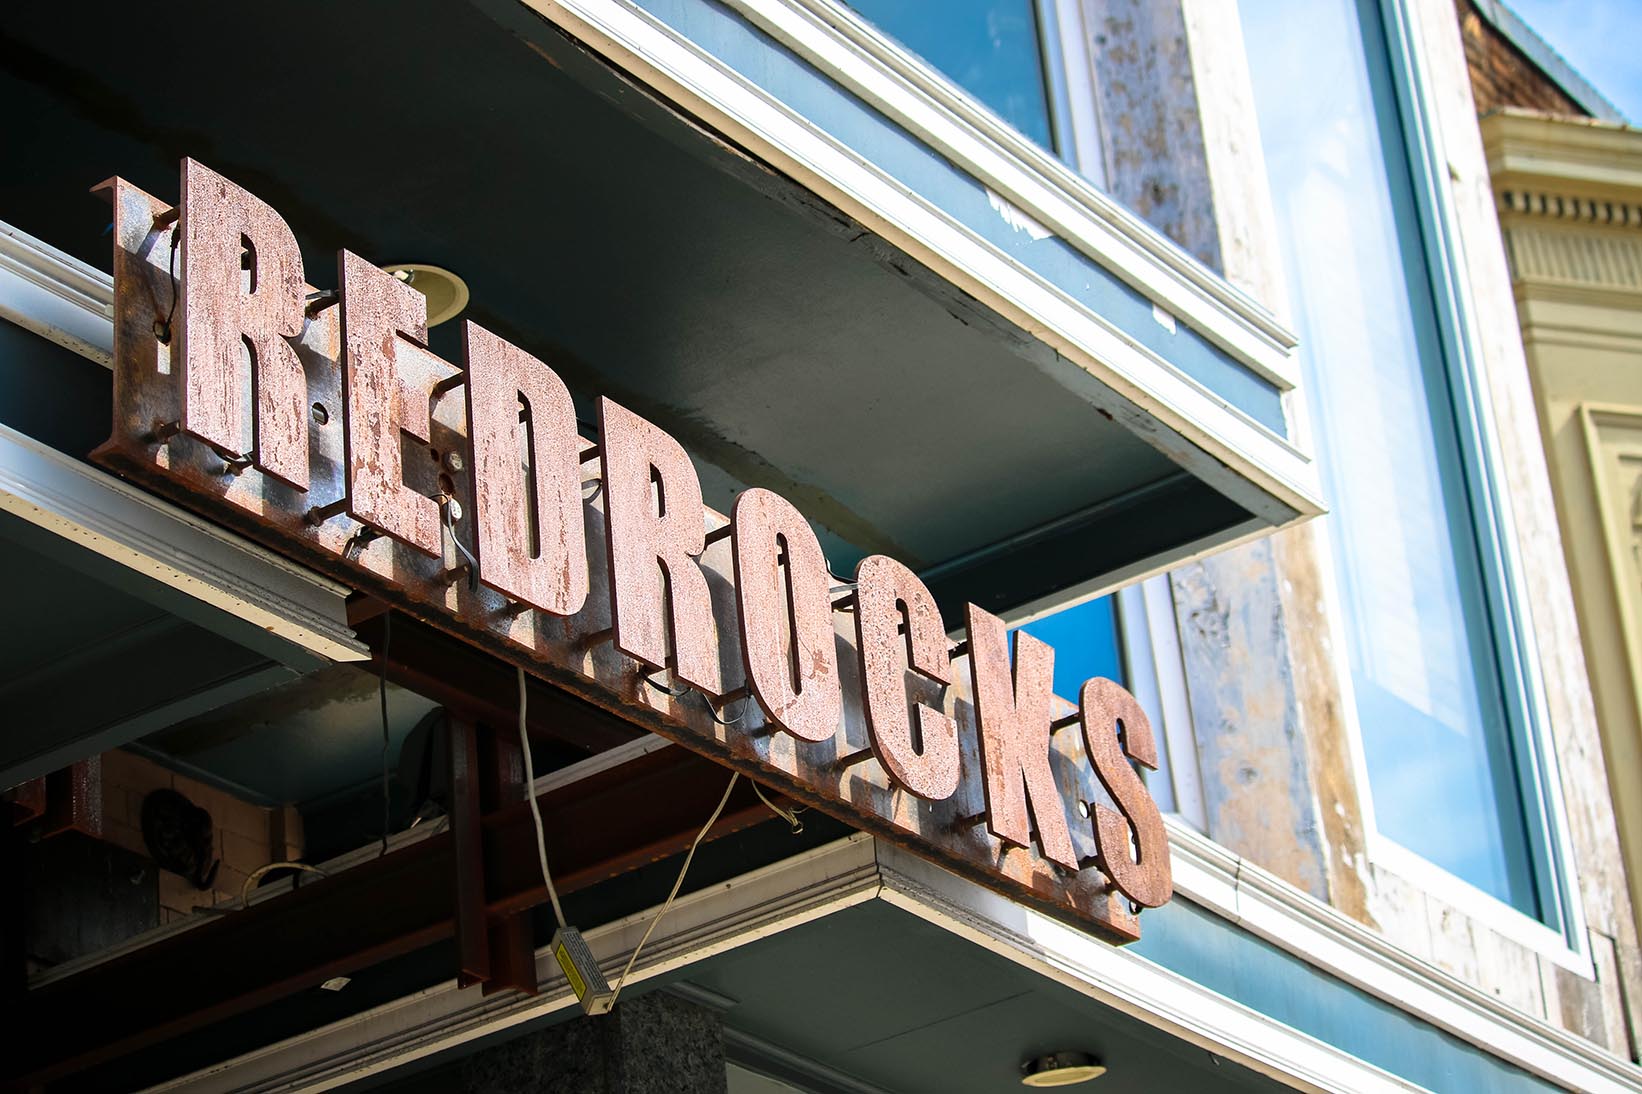 Redrocks in Atlas District, Washington, D.C.